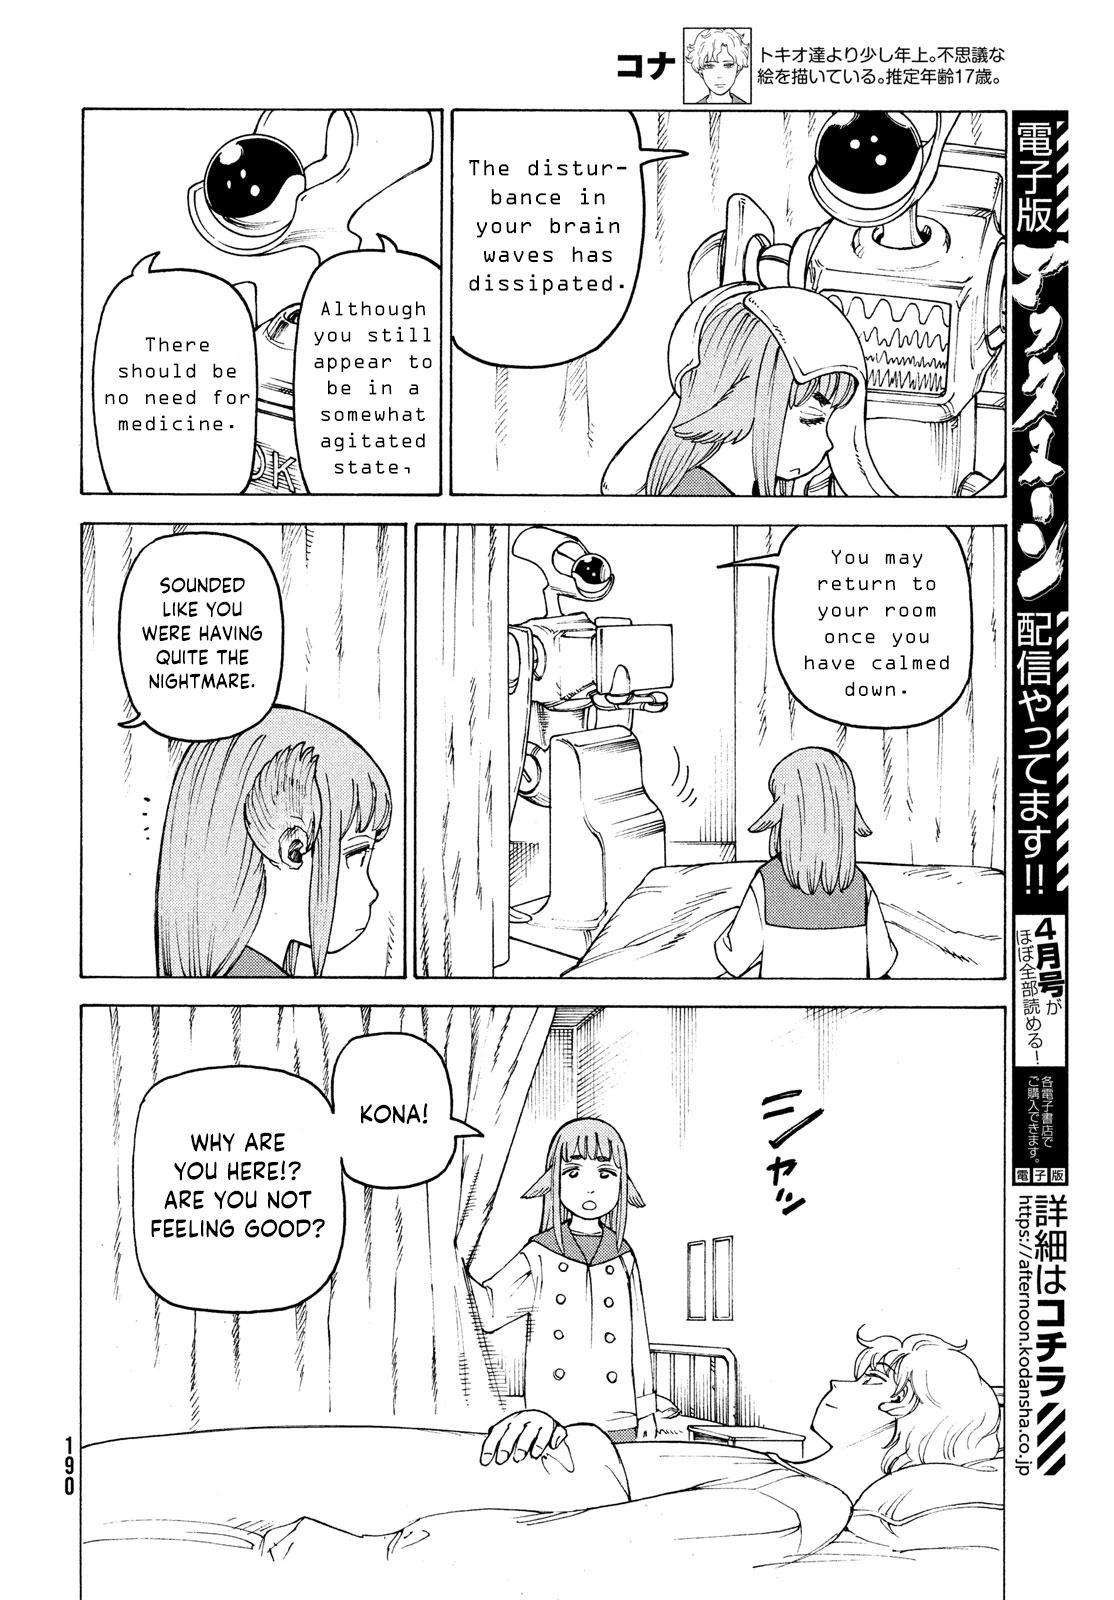 Read Tengoku Daimakyou Chapter 34: Inazaki Robin ➂ - Manganelo